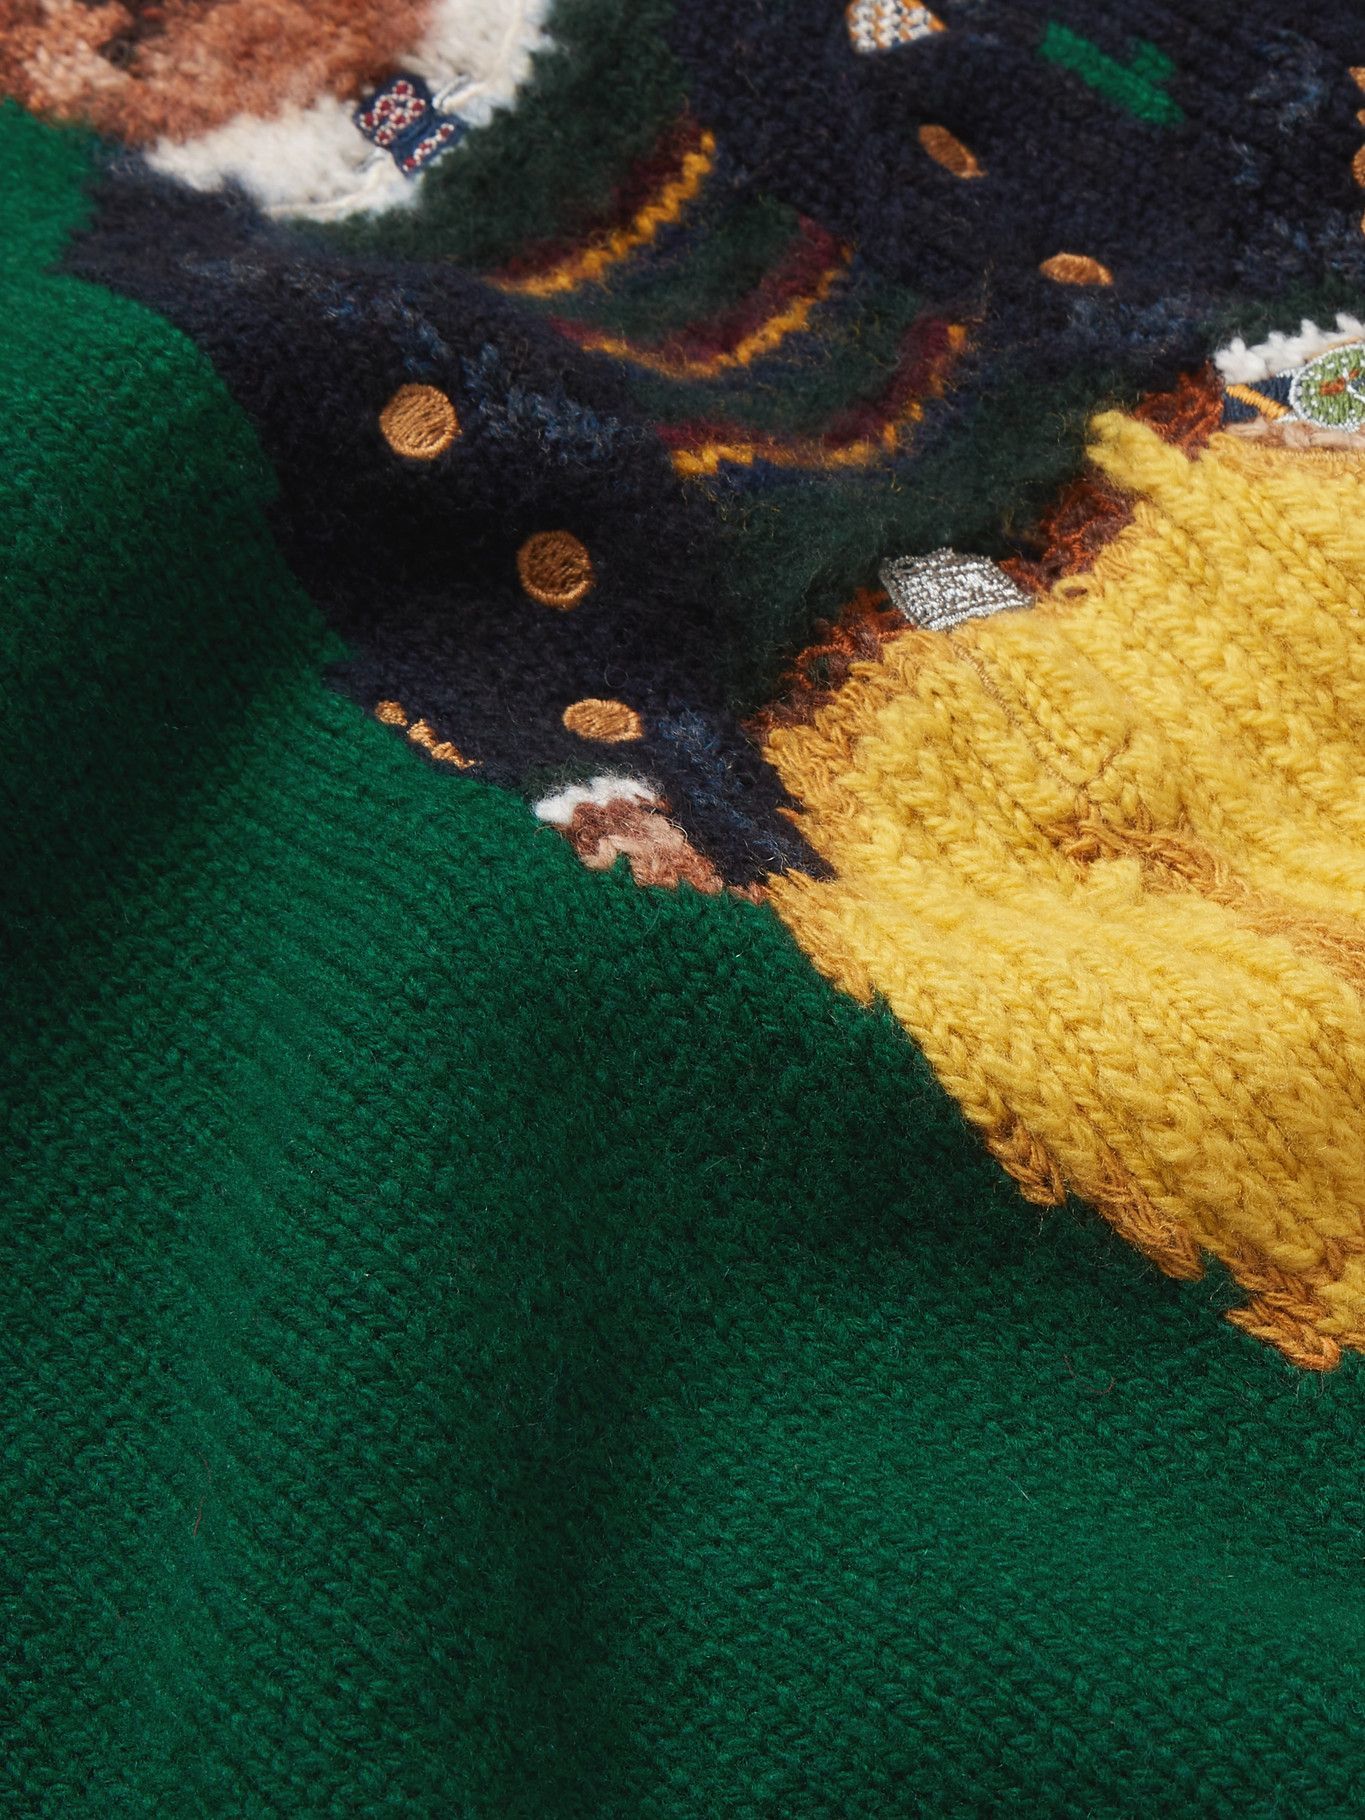 Polo Ralph Lauren - Intarsia Wool Sweater - Green